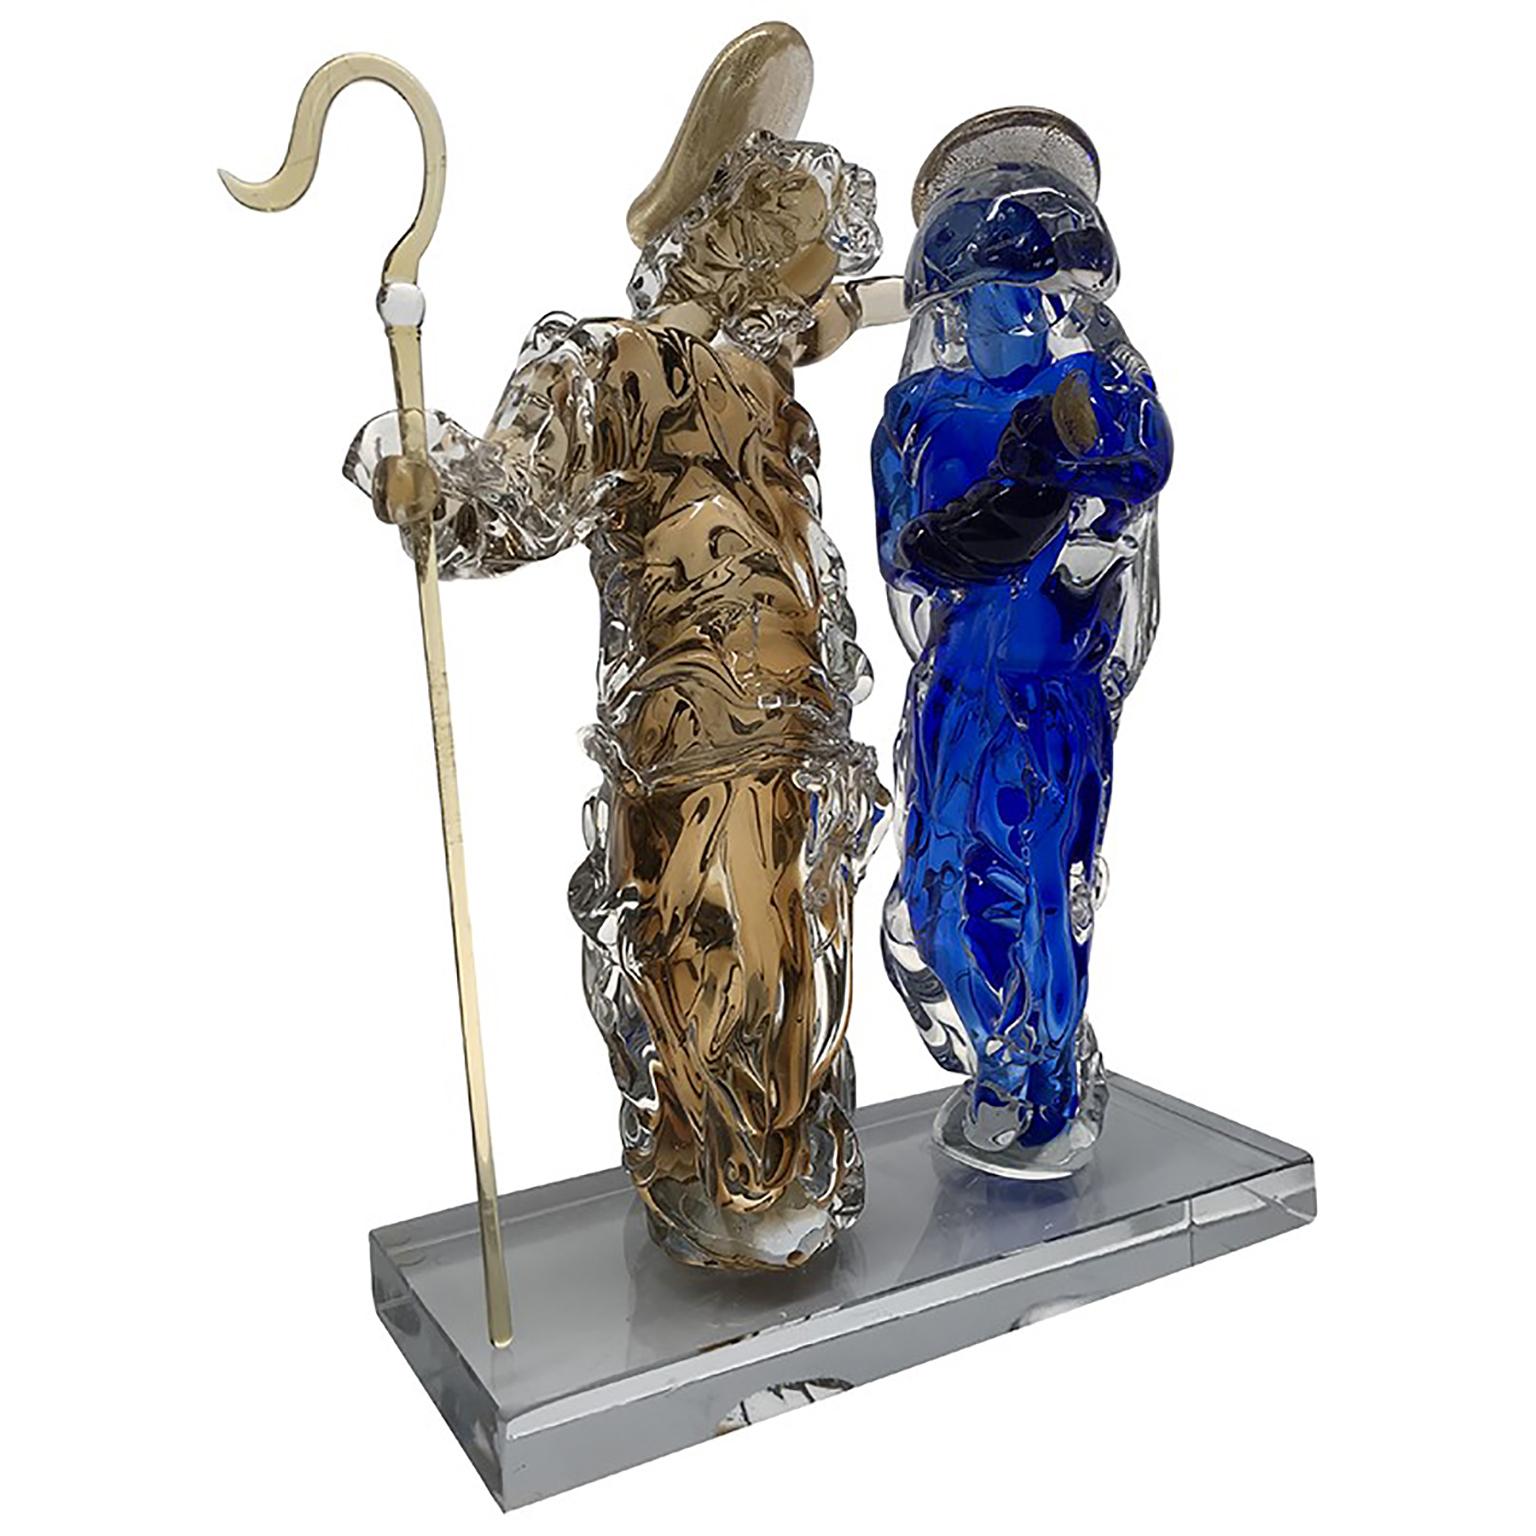 Aritistic Murano Glass Holy Family Sculpture by Roberto Beltrami